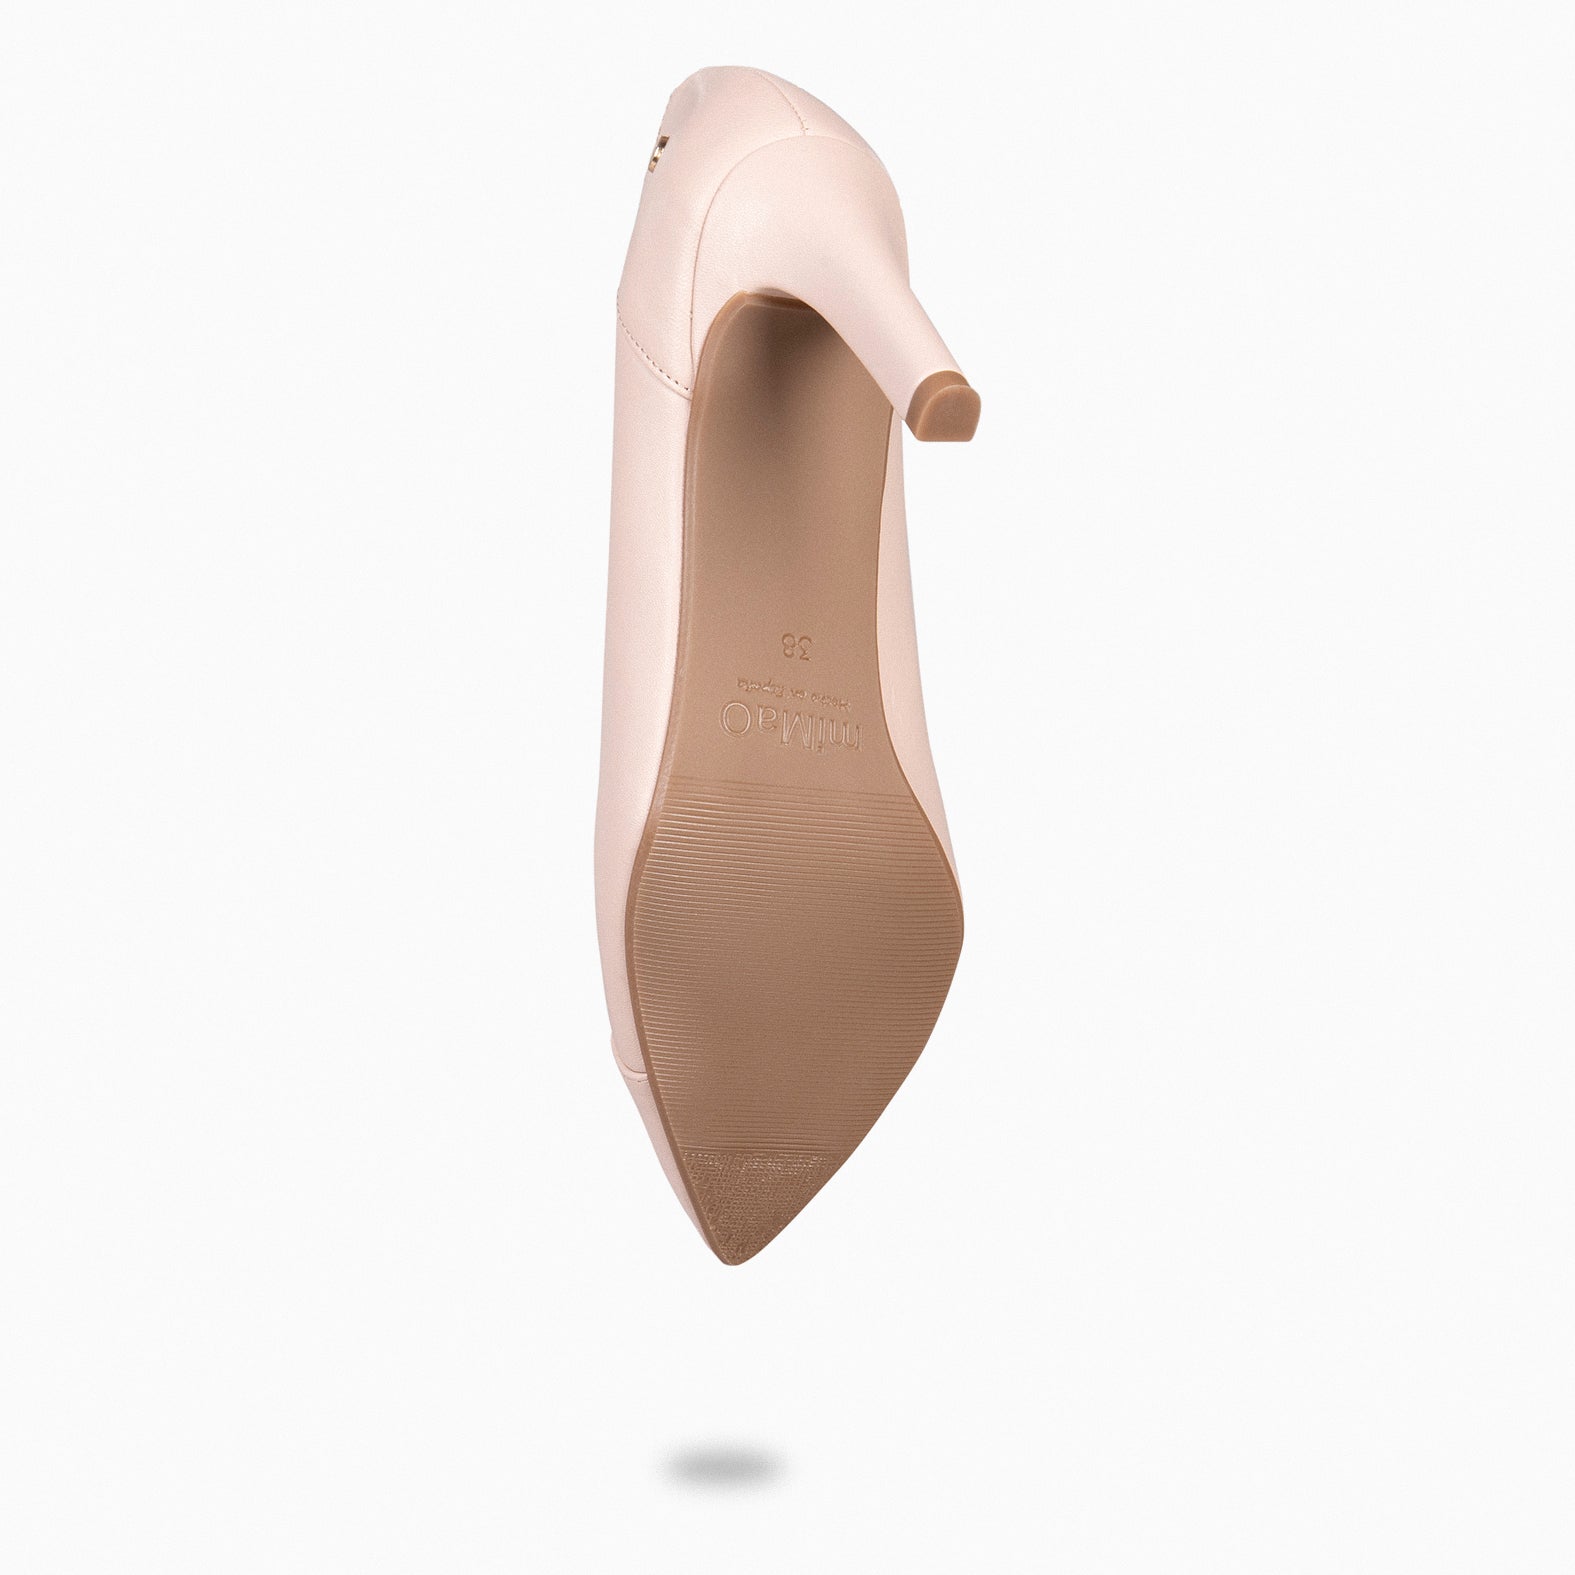 GLAM – Zapatos elegantes de tacón alto NUDE